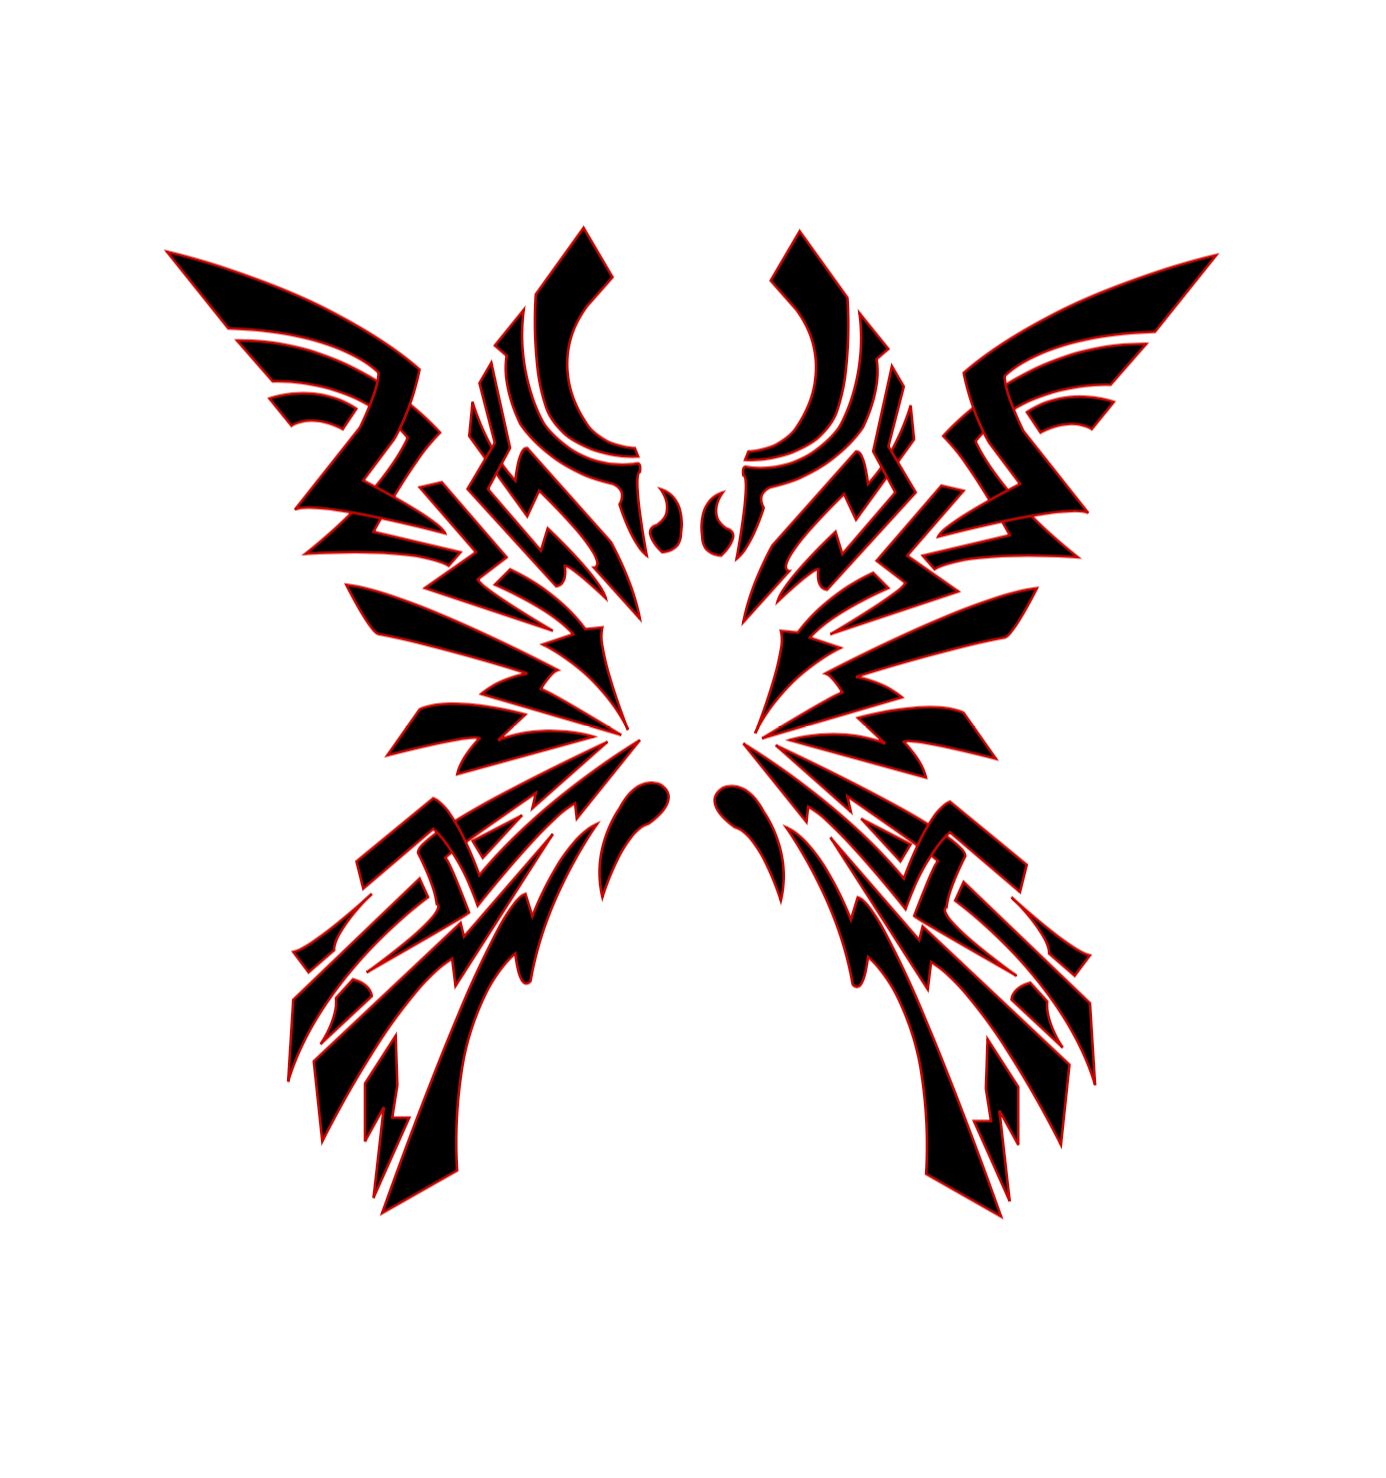 2003 Tribal Butterfly Tattoo Design on Behance